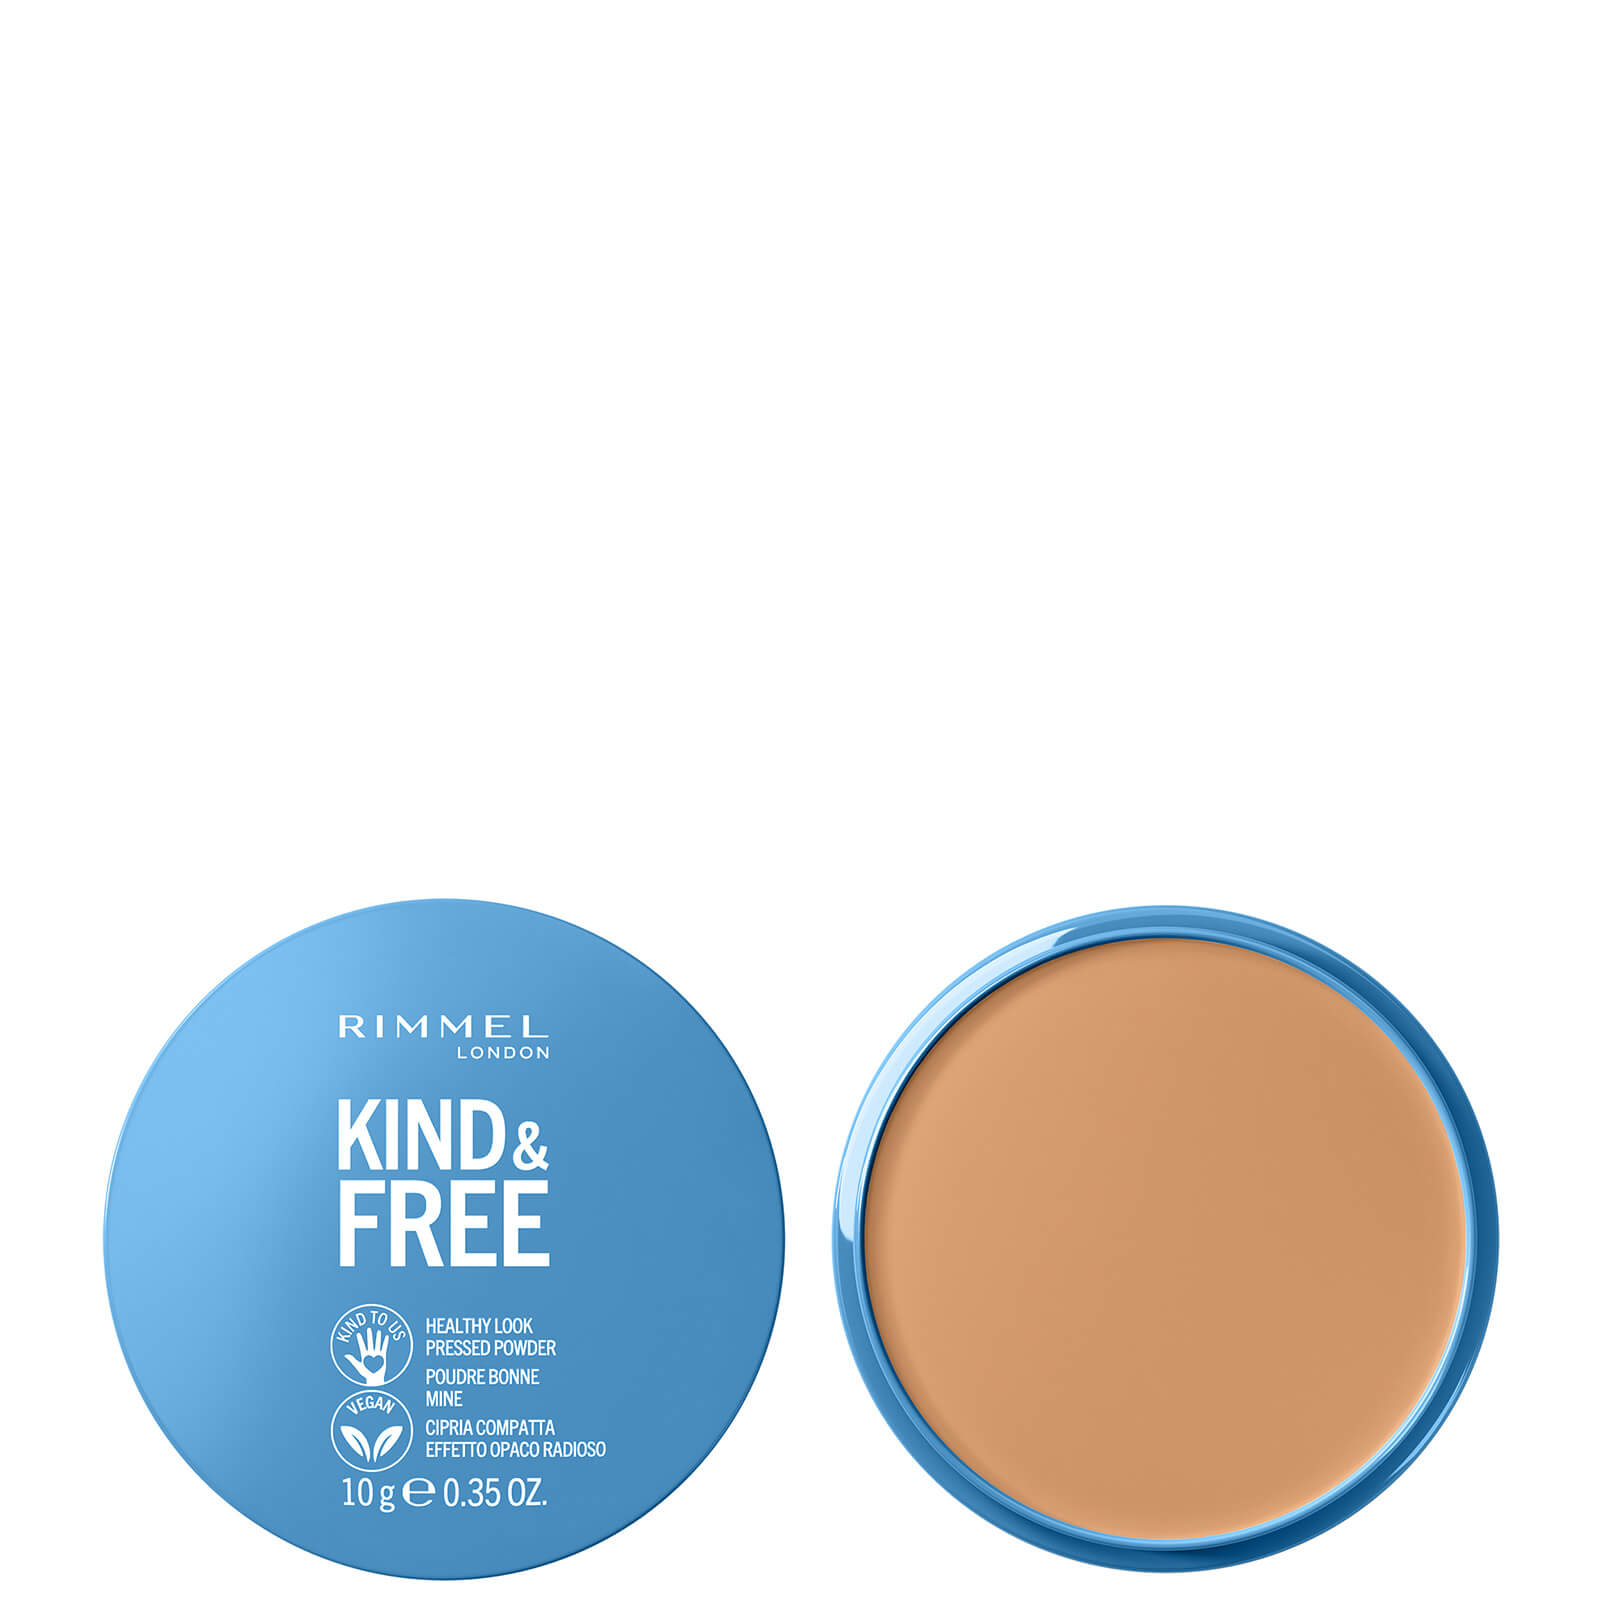 Rimmel Kind and Free Pressed Powder 10g (Various Shades) - Medium